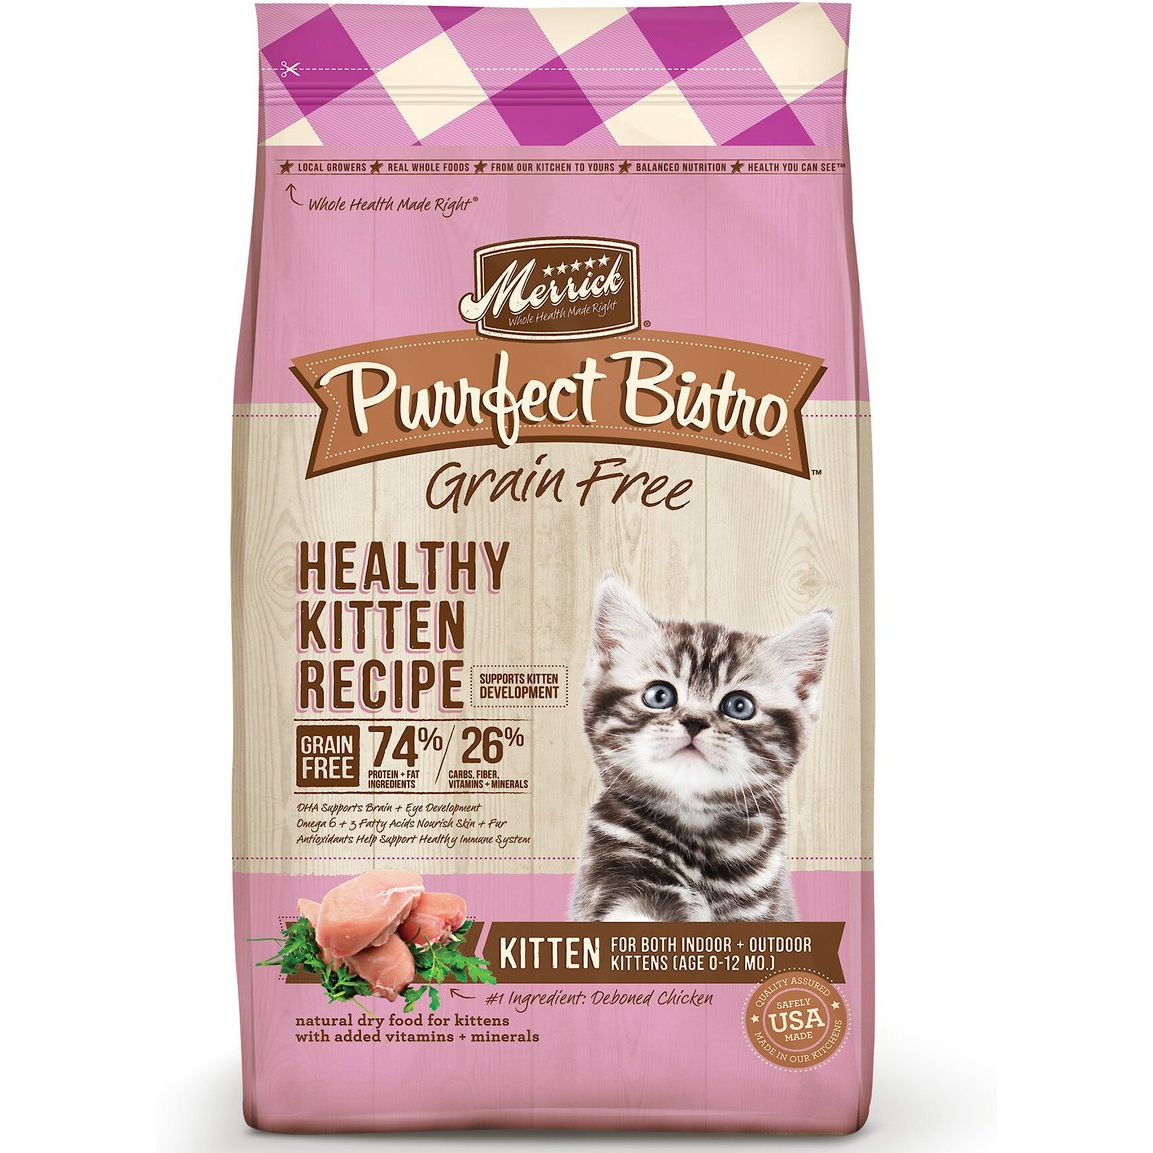 Merrick Purrfect Bistro Grain-Free Healthy Kitten Recipe new